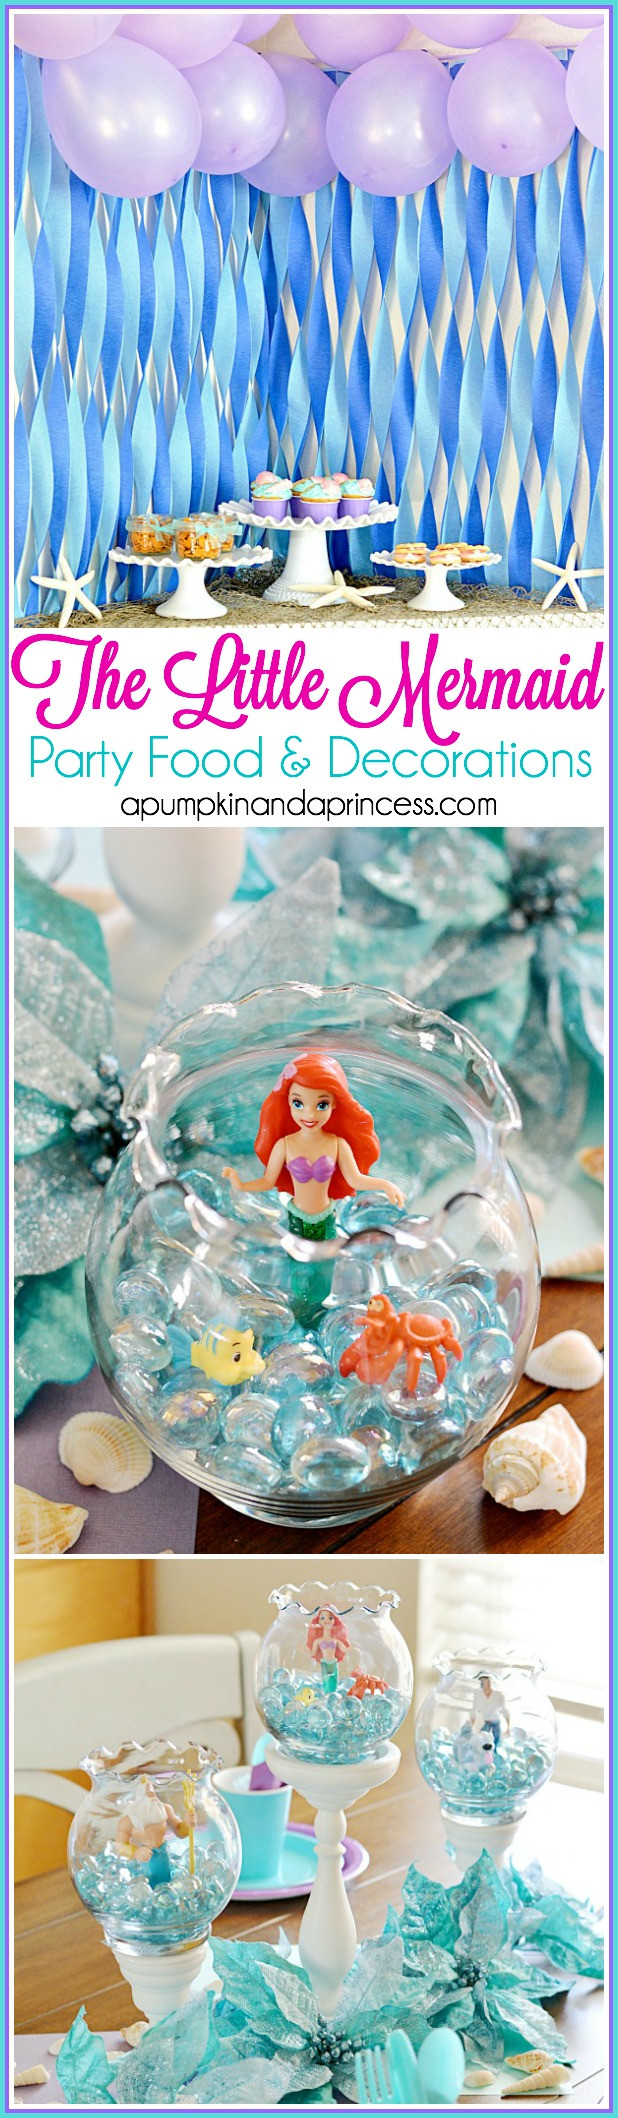 Mermaid Party Ideas Pinterest
 The Little Mermaid Party A Pumpkin And A Princess